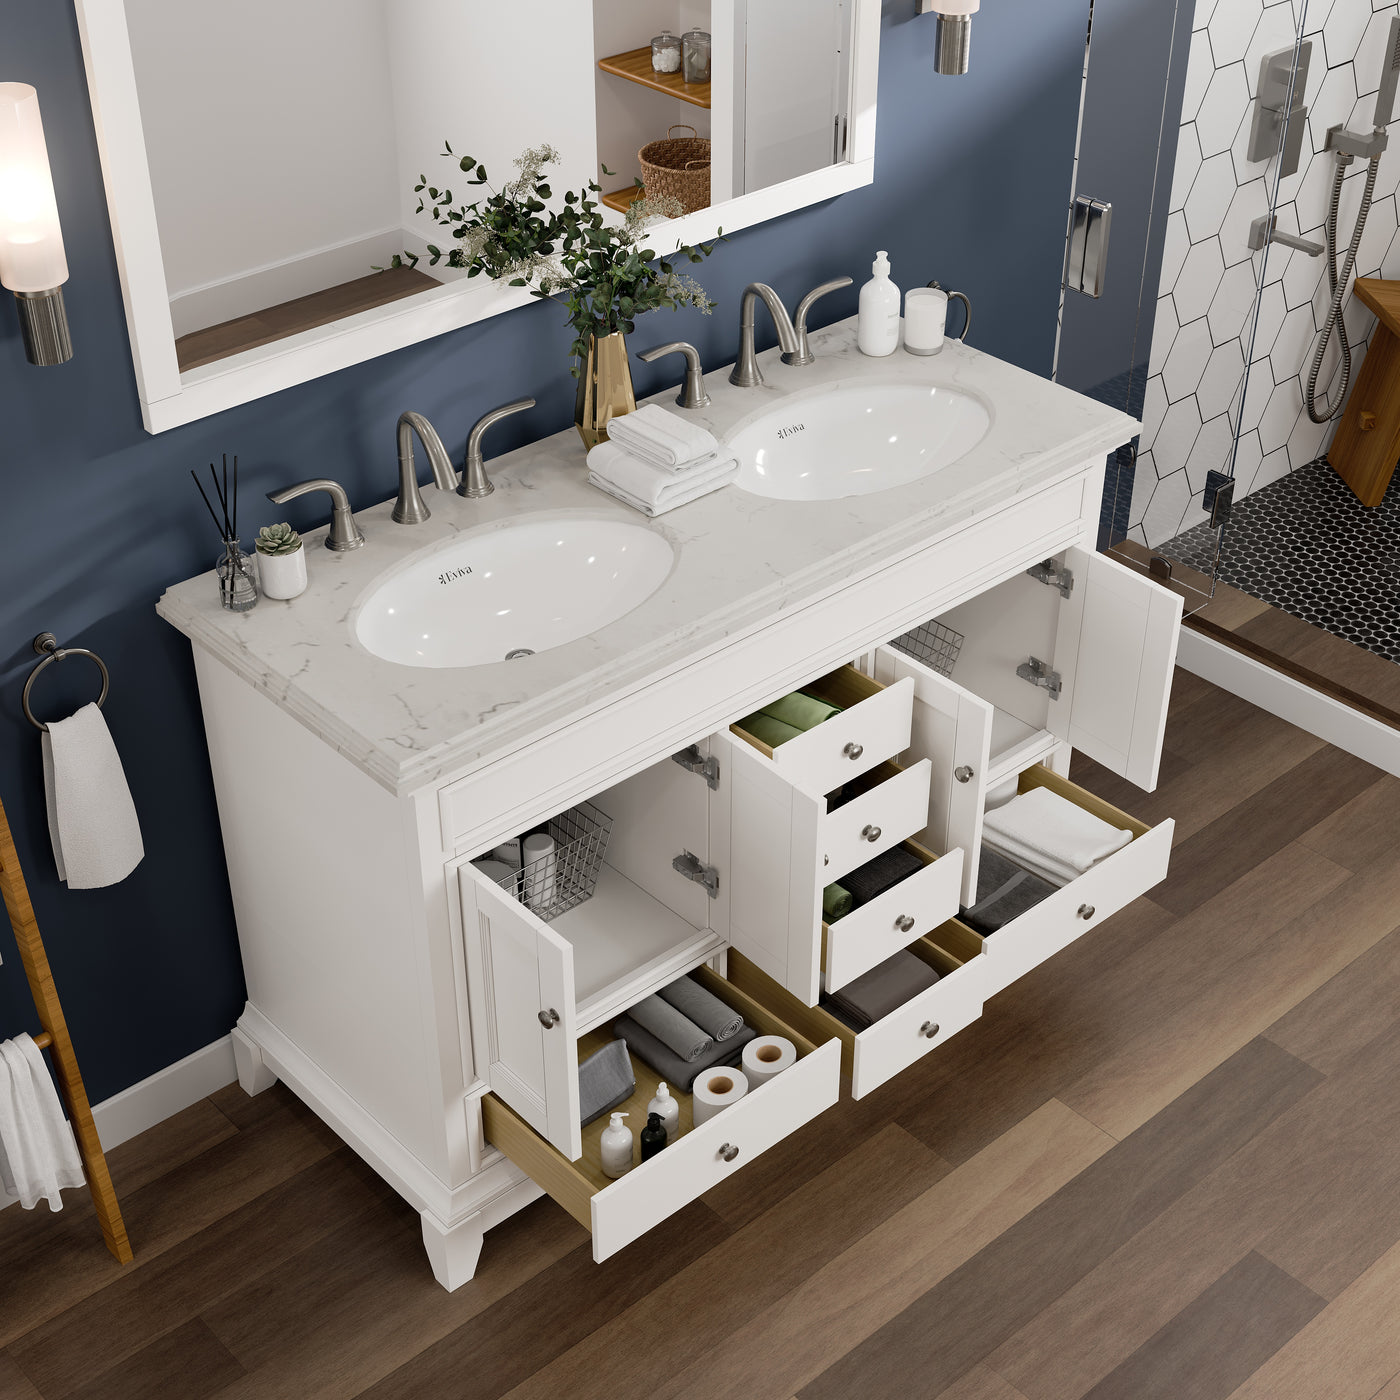 Elite Stamford 48"W x 22"D White Double Sink Bathroom Vanity with White Carrara Quartz Countertop and Undermount Porcelain Sinks